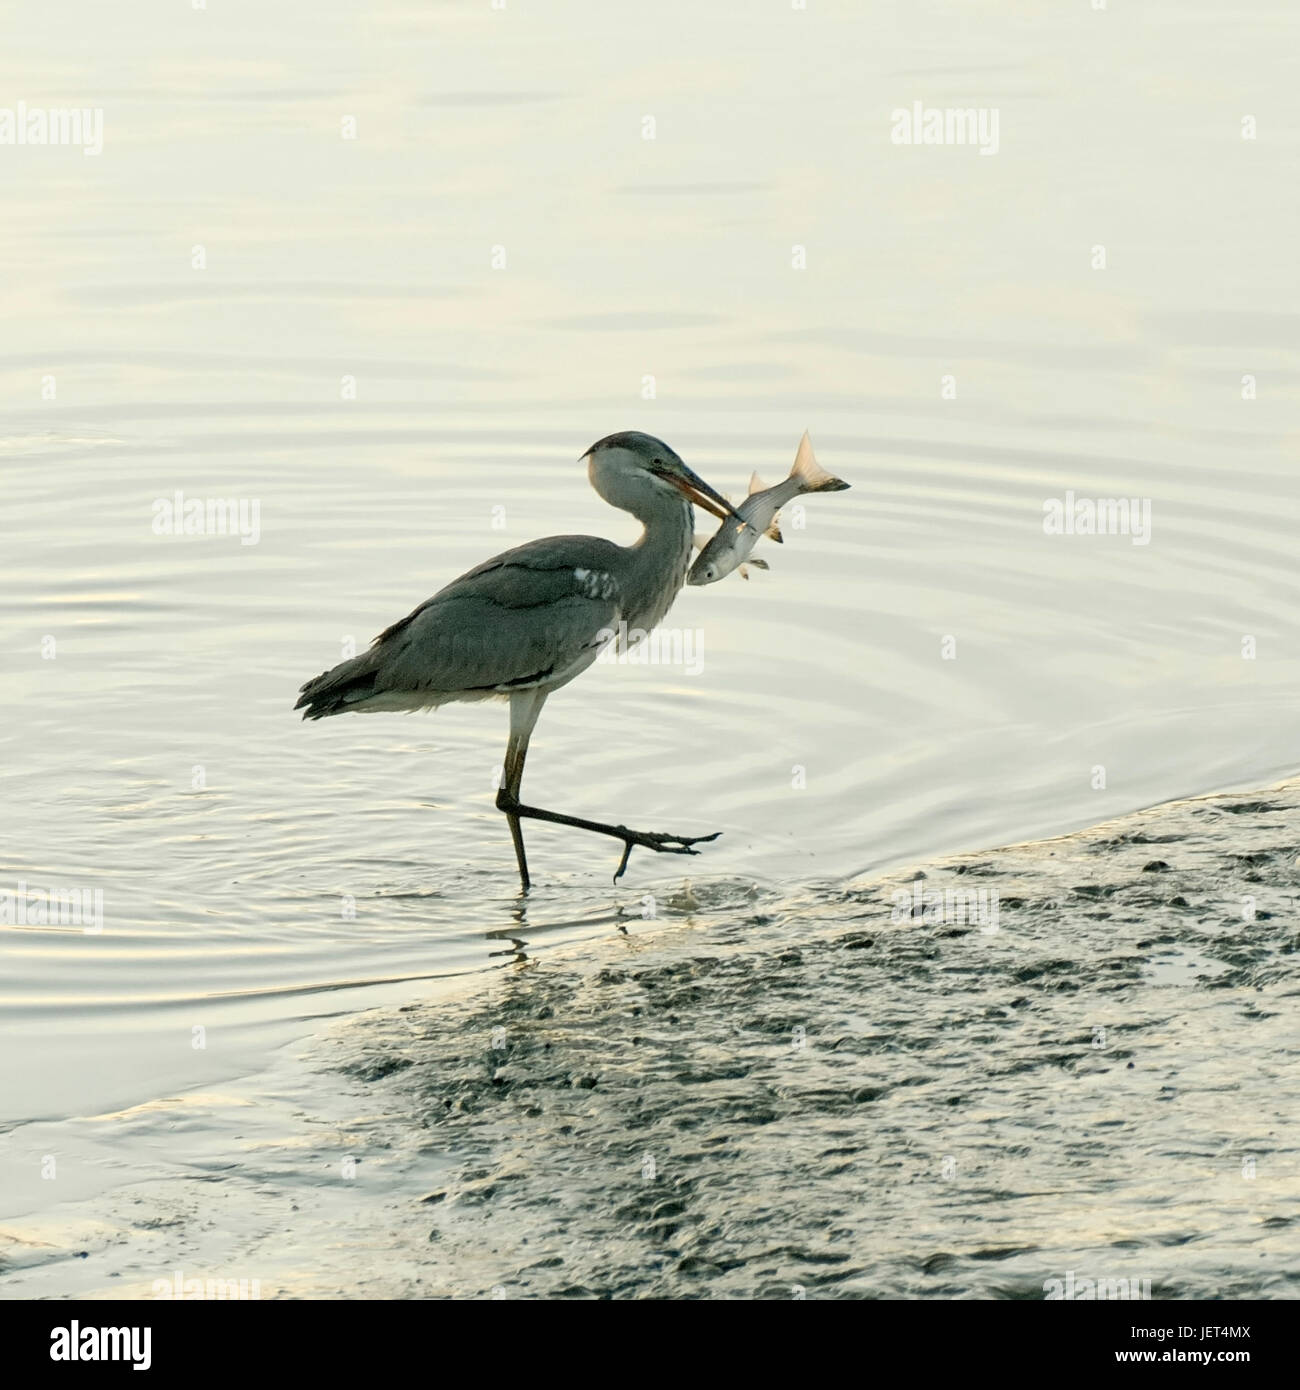 Grey Heron catching a mullet. Sado river, Portugal Stock Photo